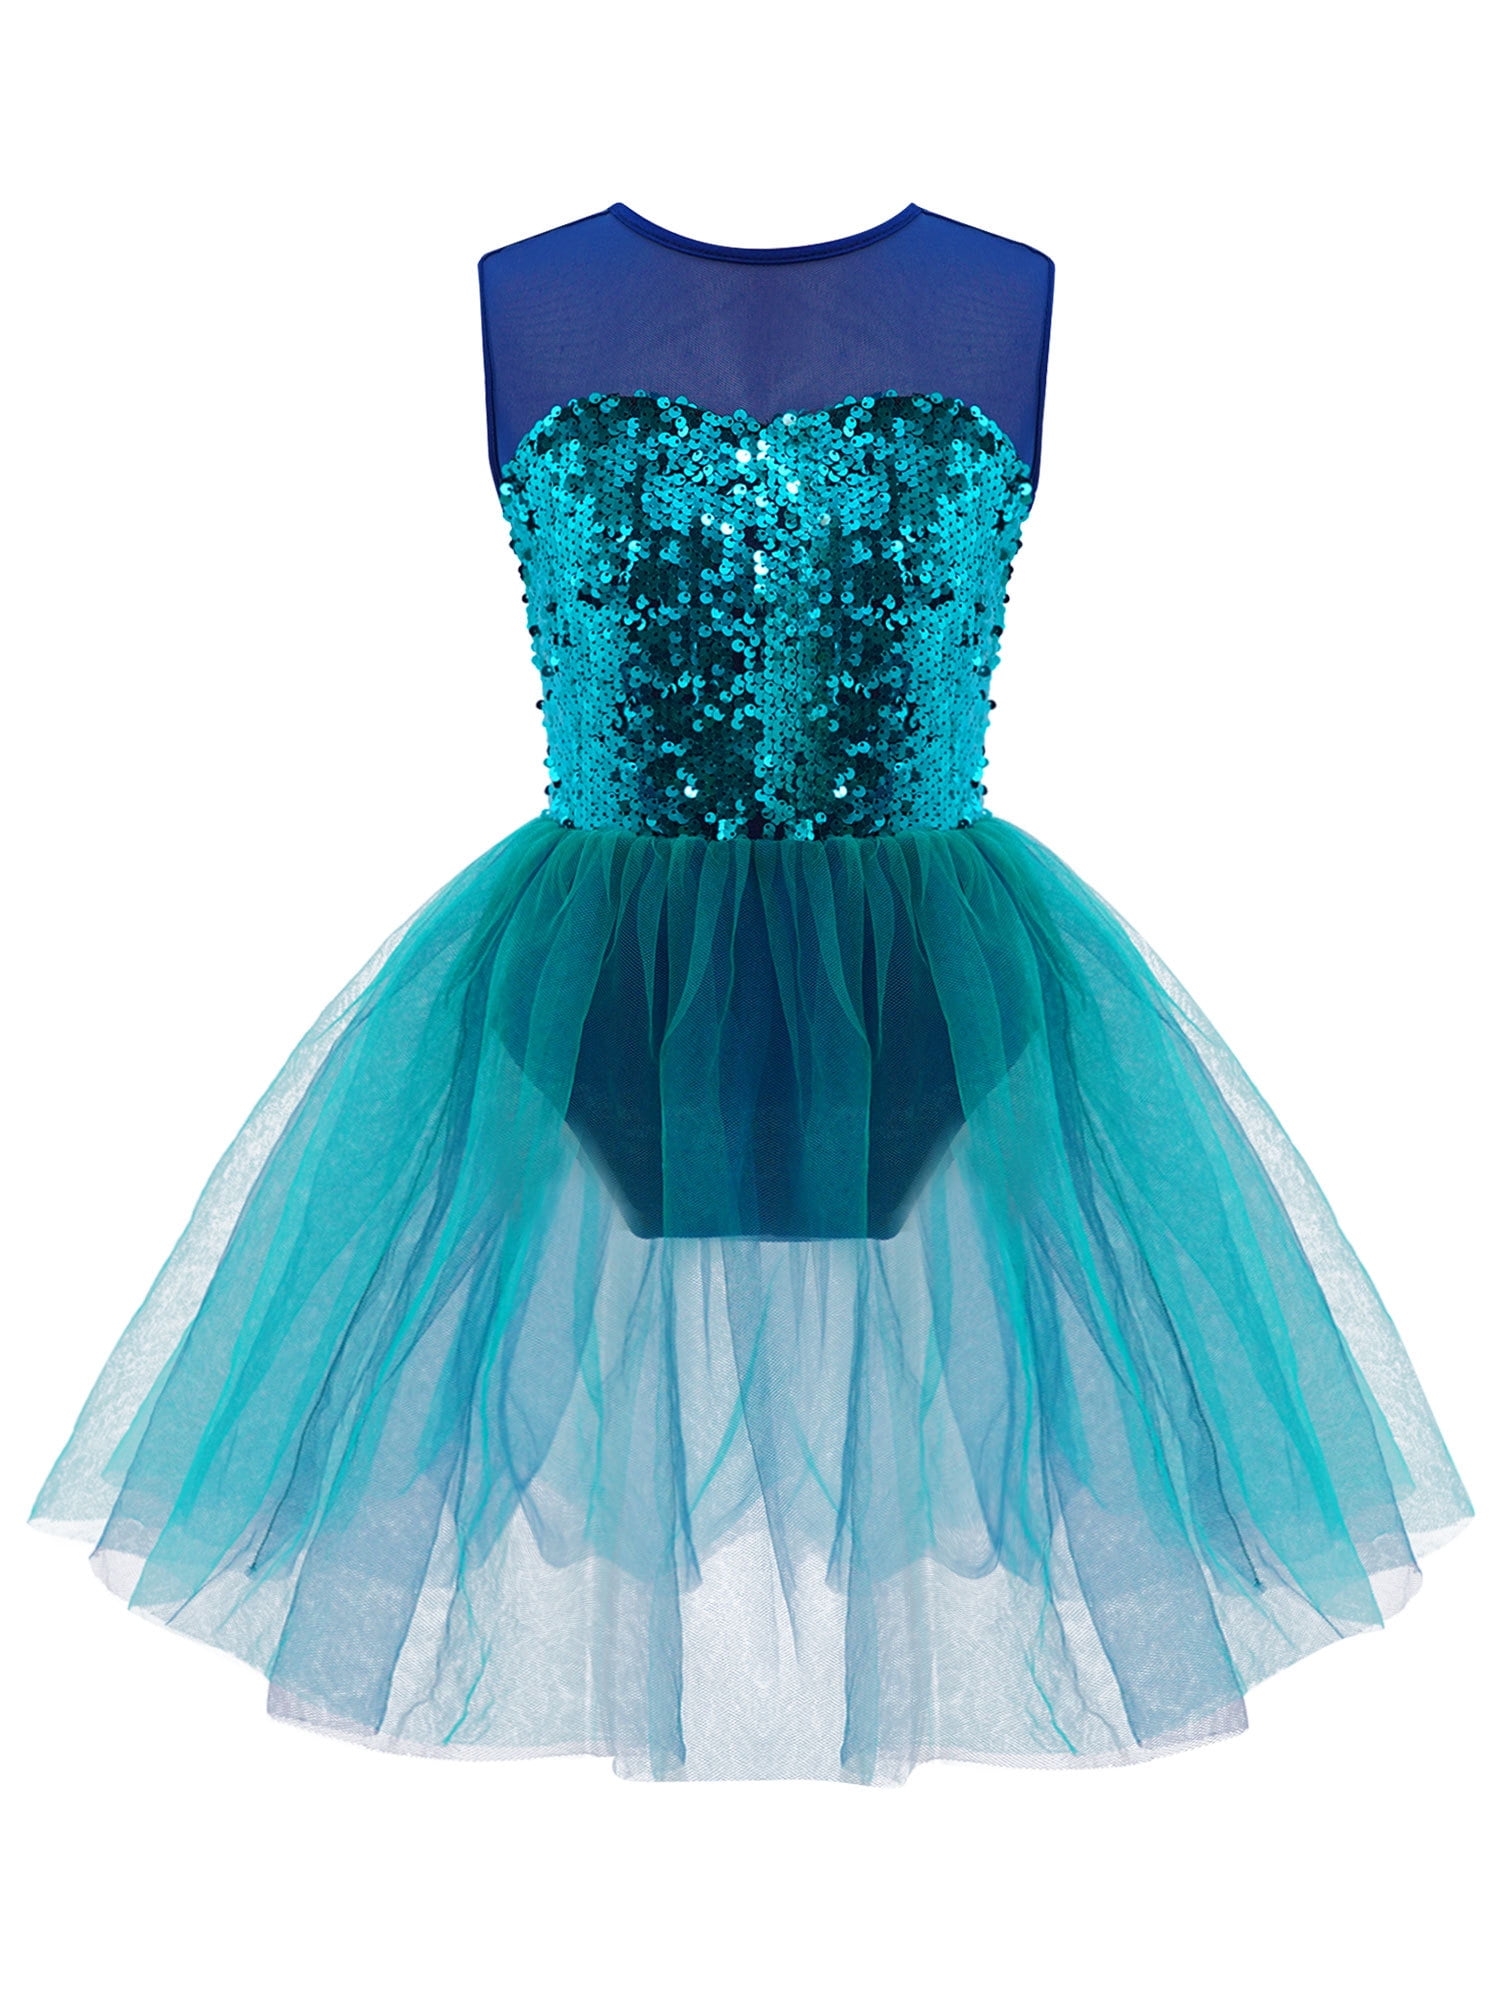 CHICTRY Girls' Ballet Dance Leotard Dress Sleeveless Sequins Bodice Open Back Mesh Tutu Dress Ballerina Dancewear